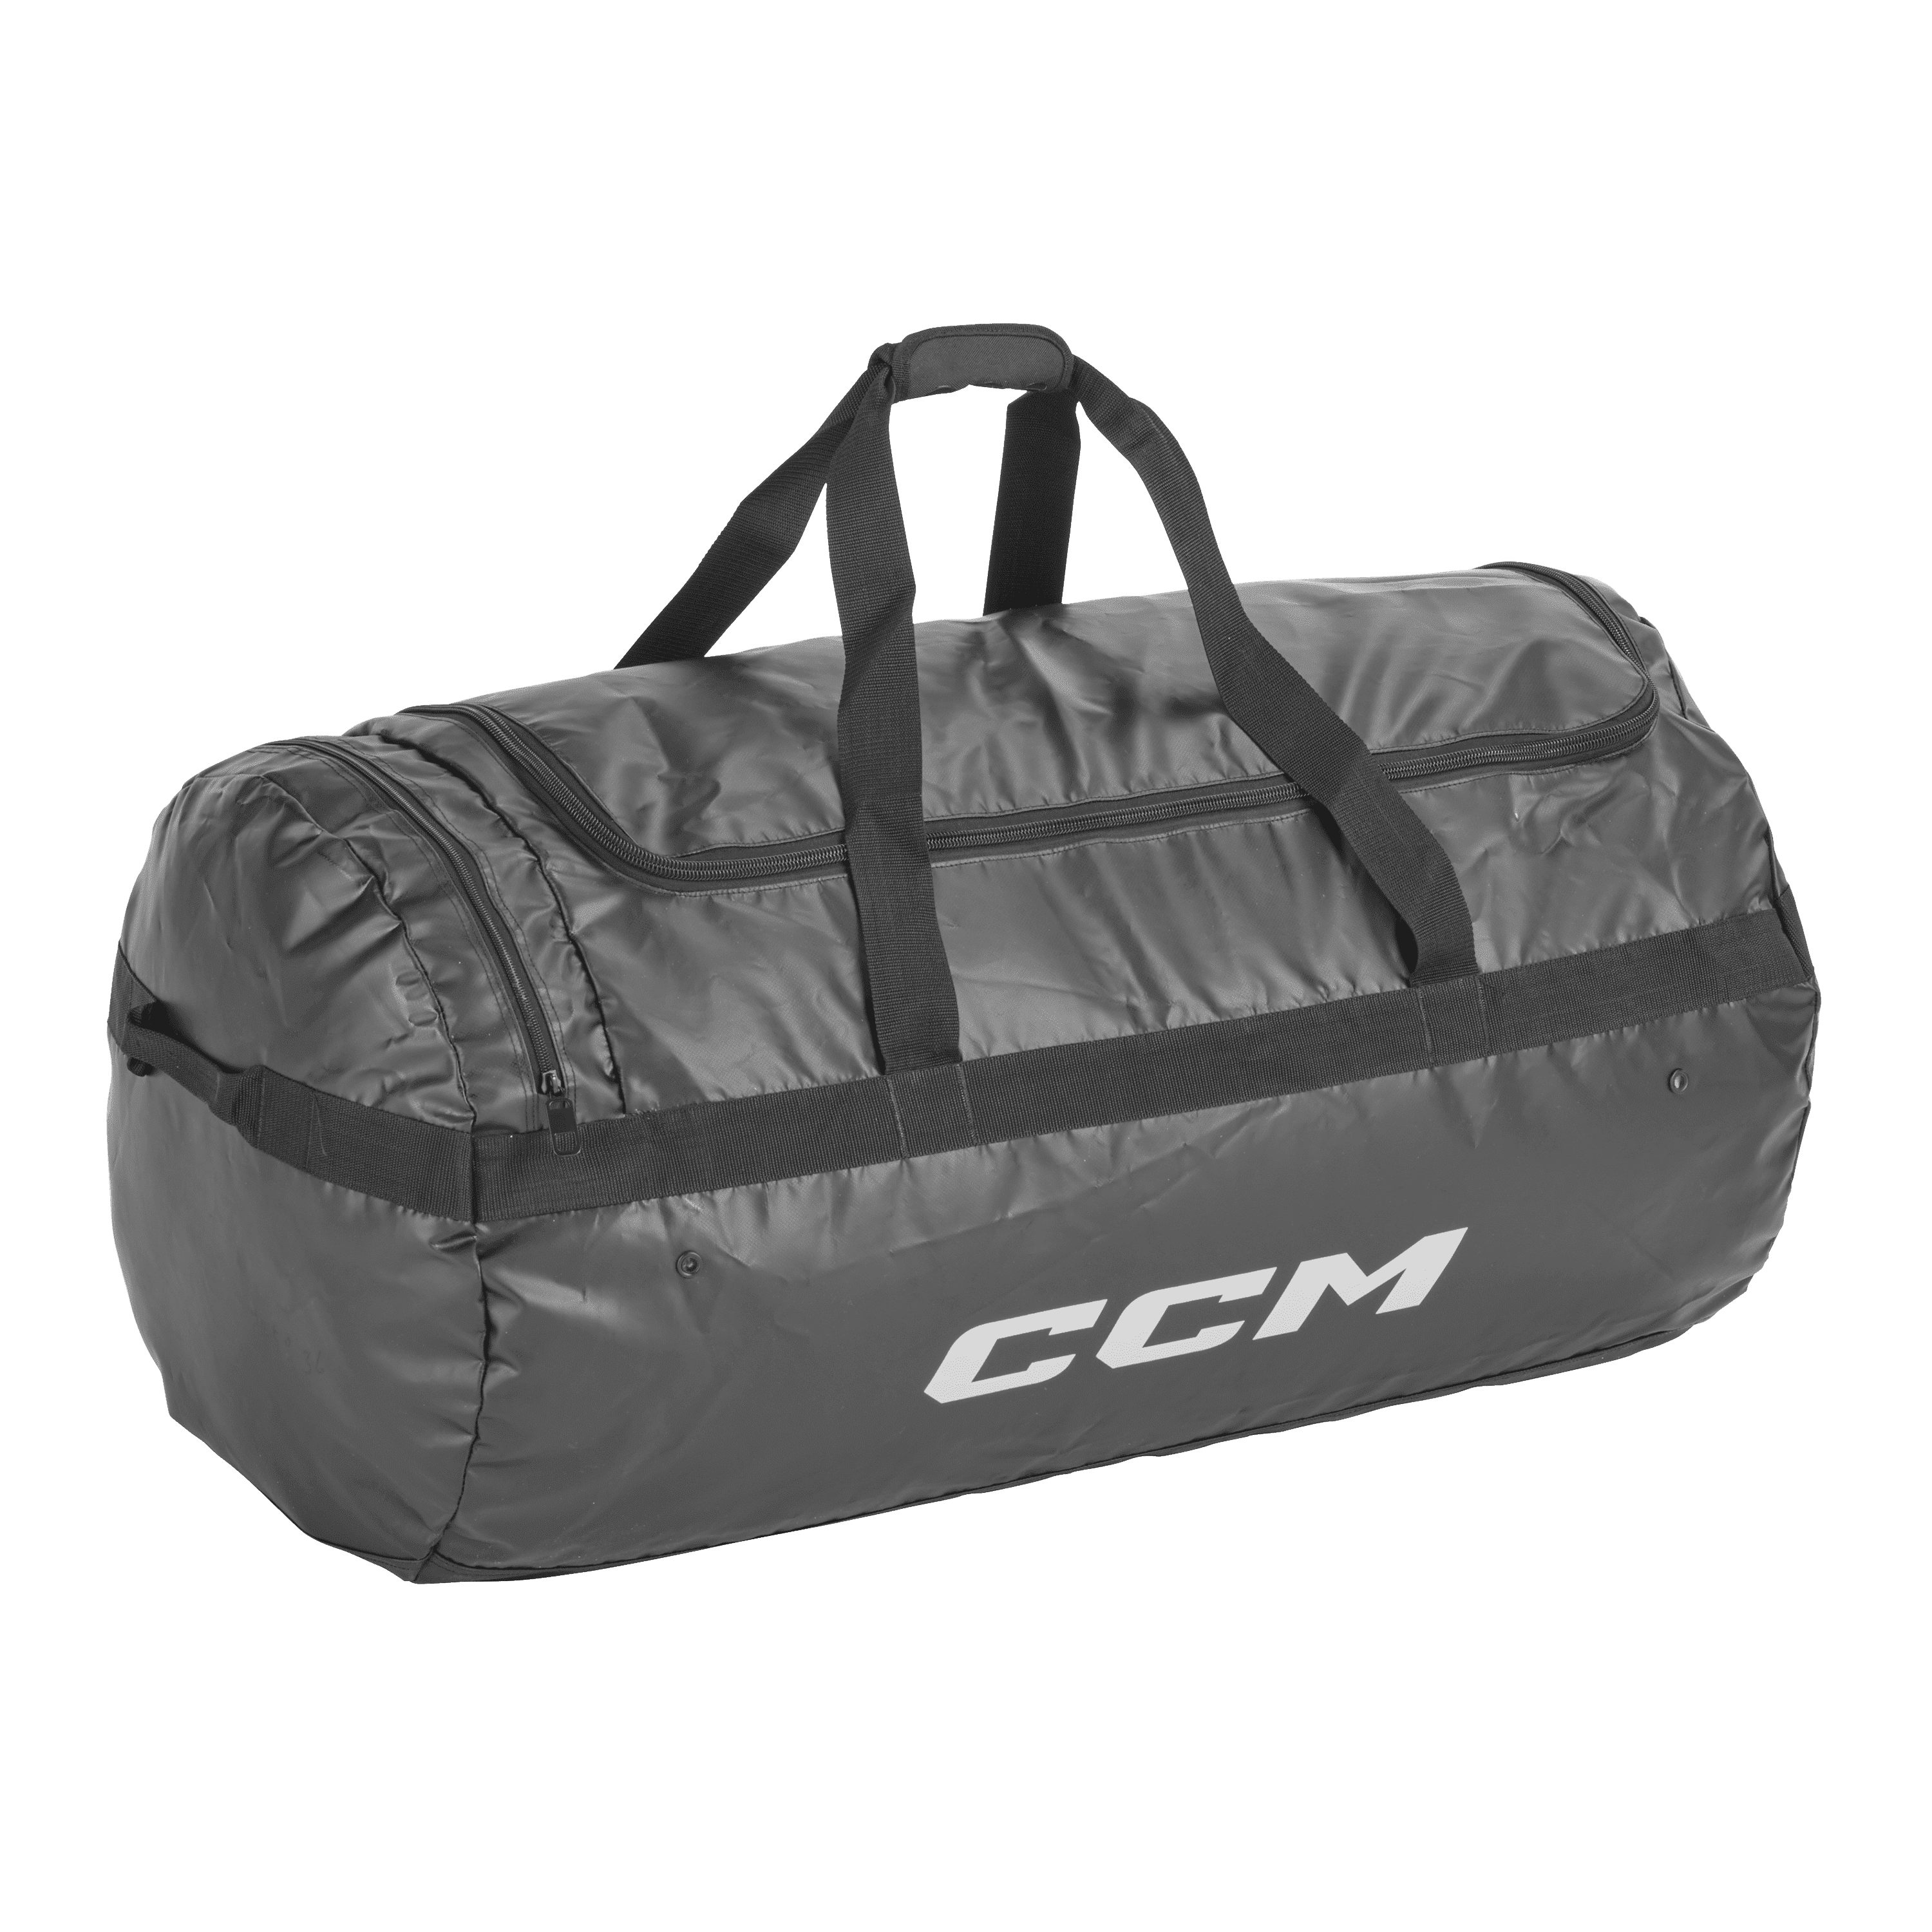 Tasche CCM 450 Player Elite Carry Bag 36"L x 20"H x 20" W